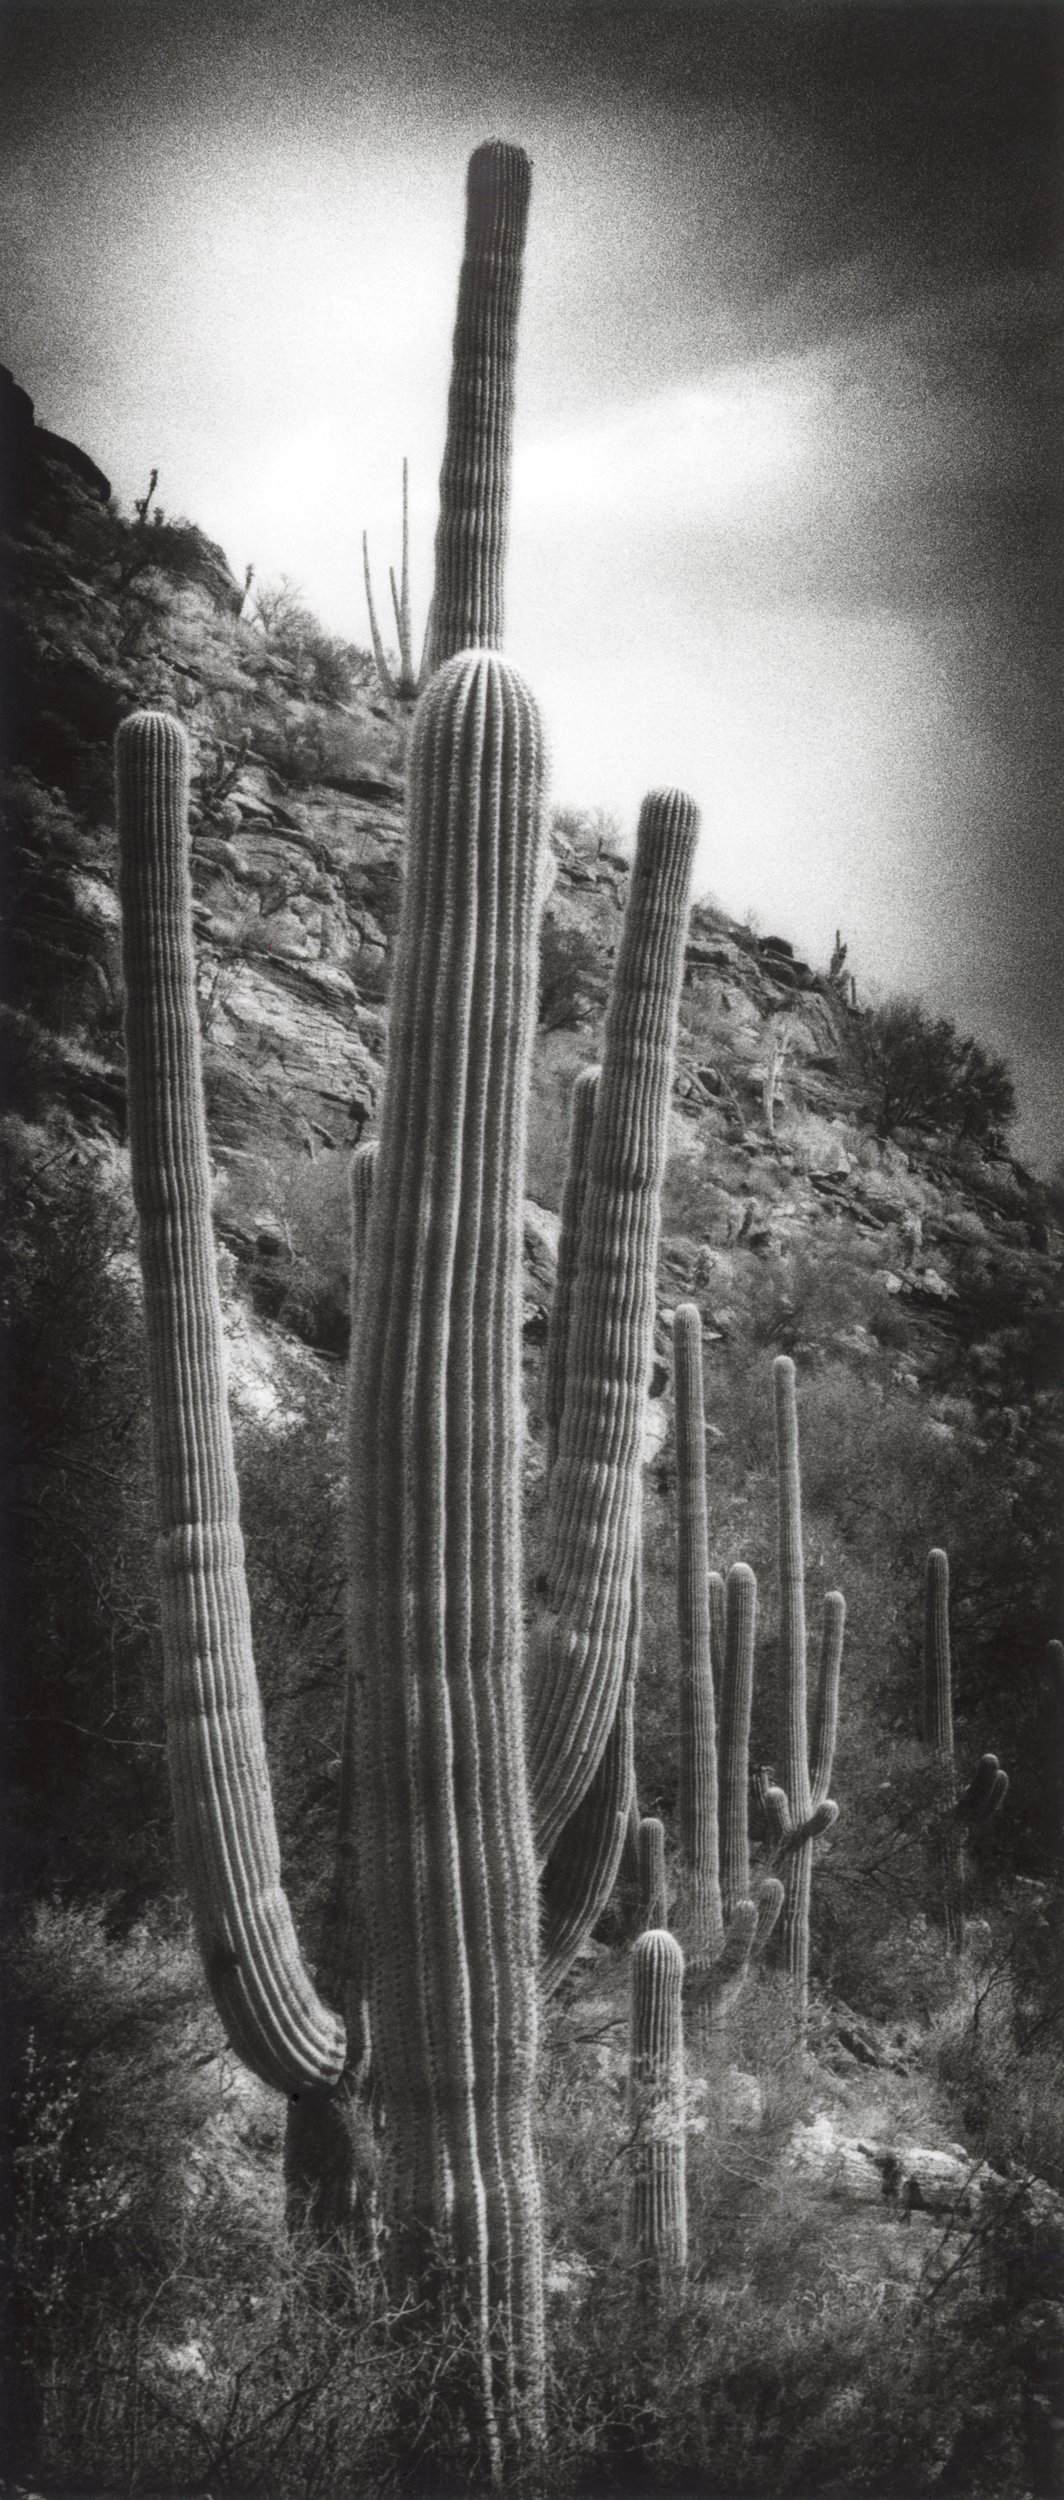   Saguaro (variaton)  